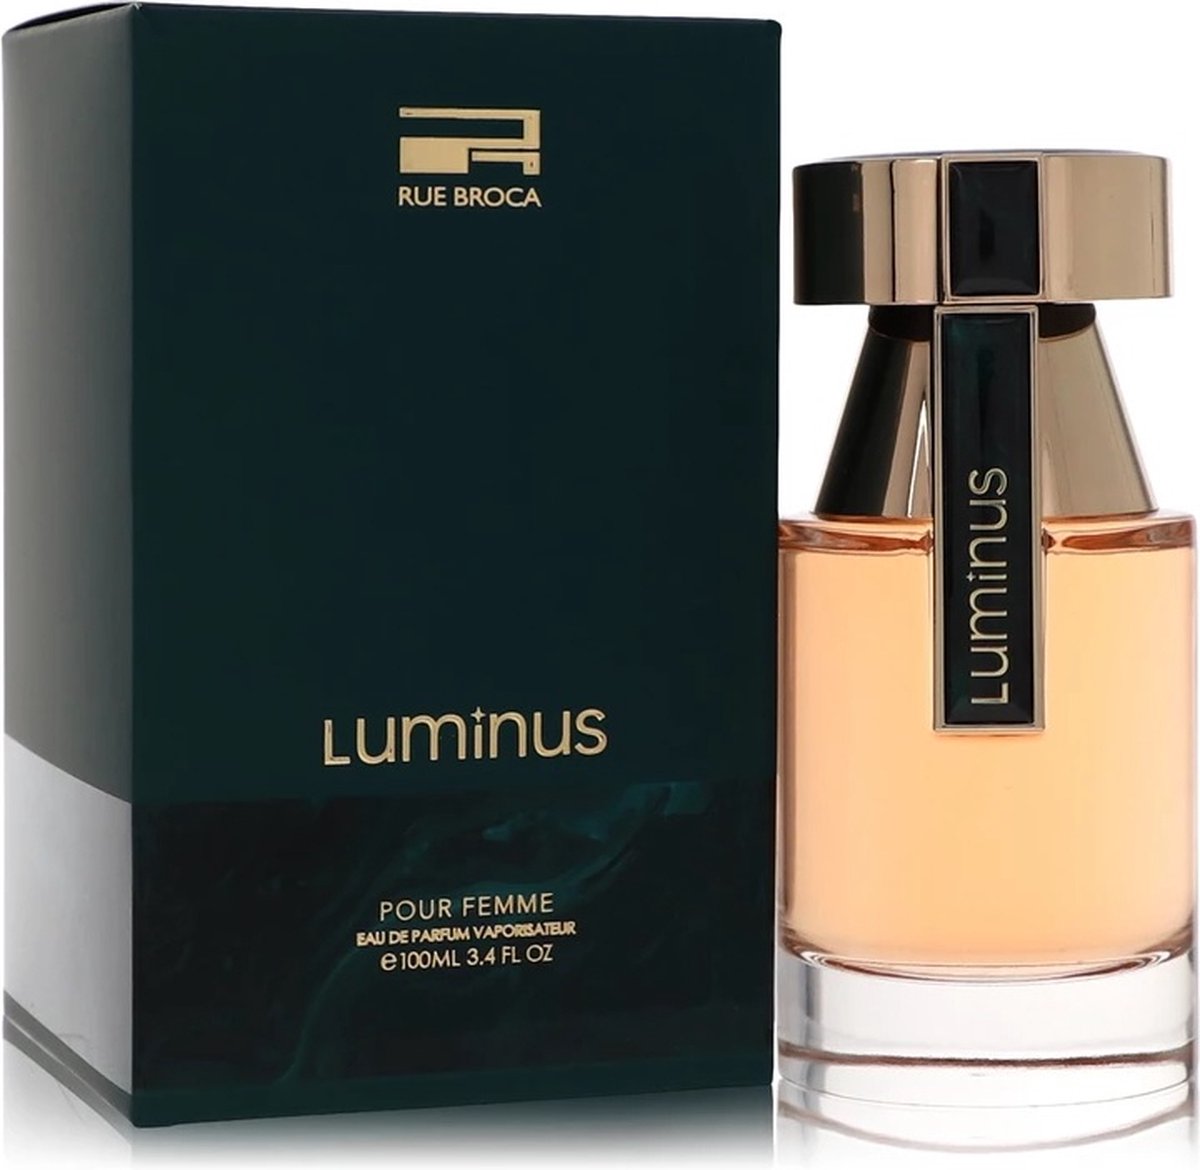 Rue Broca Luminus eau de parfum spray 100 ml